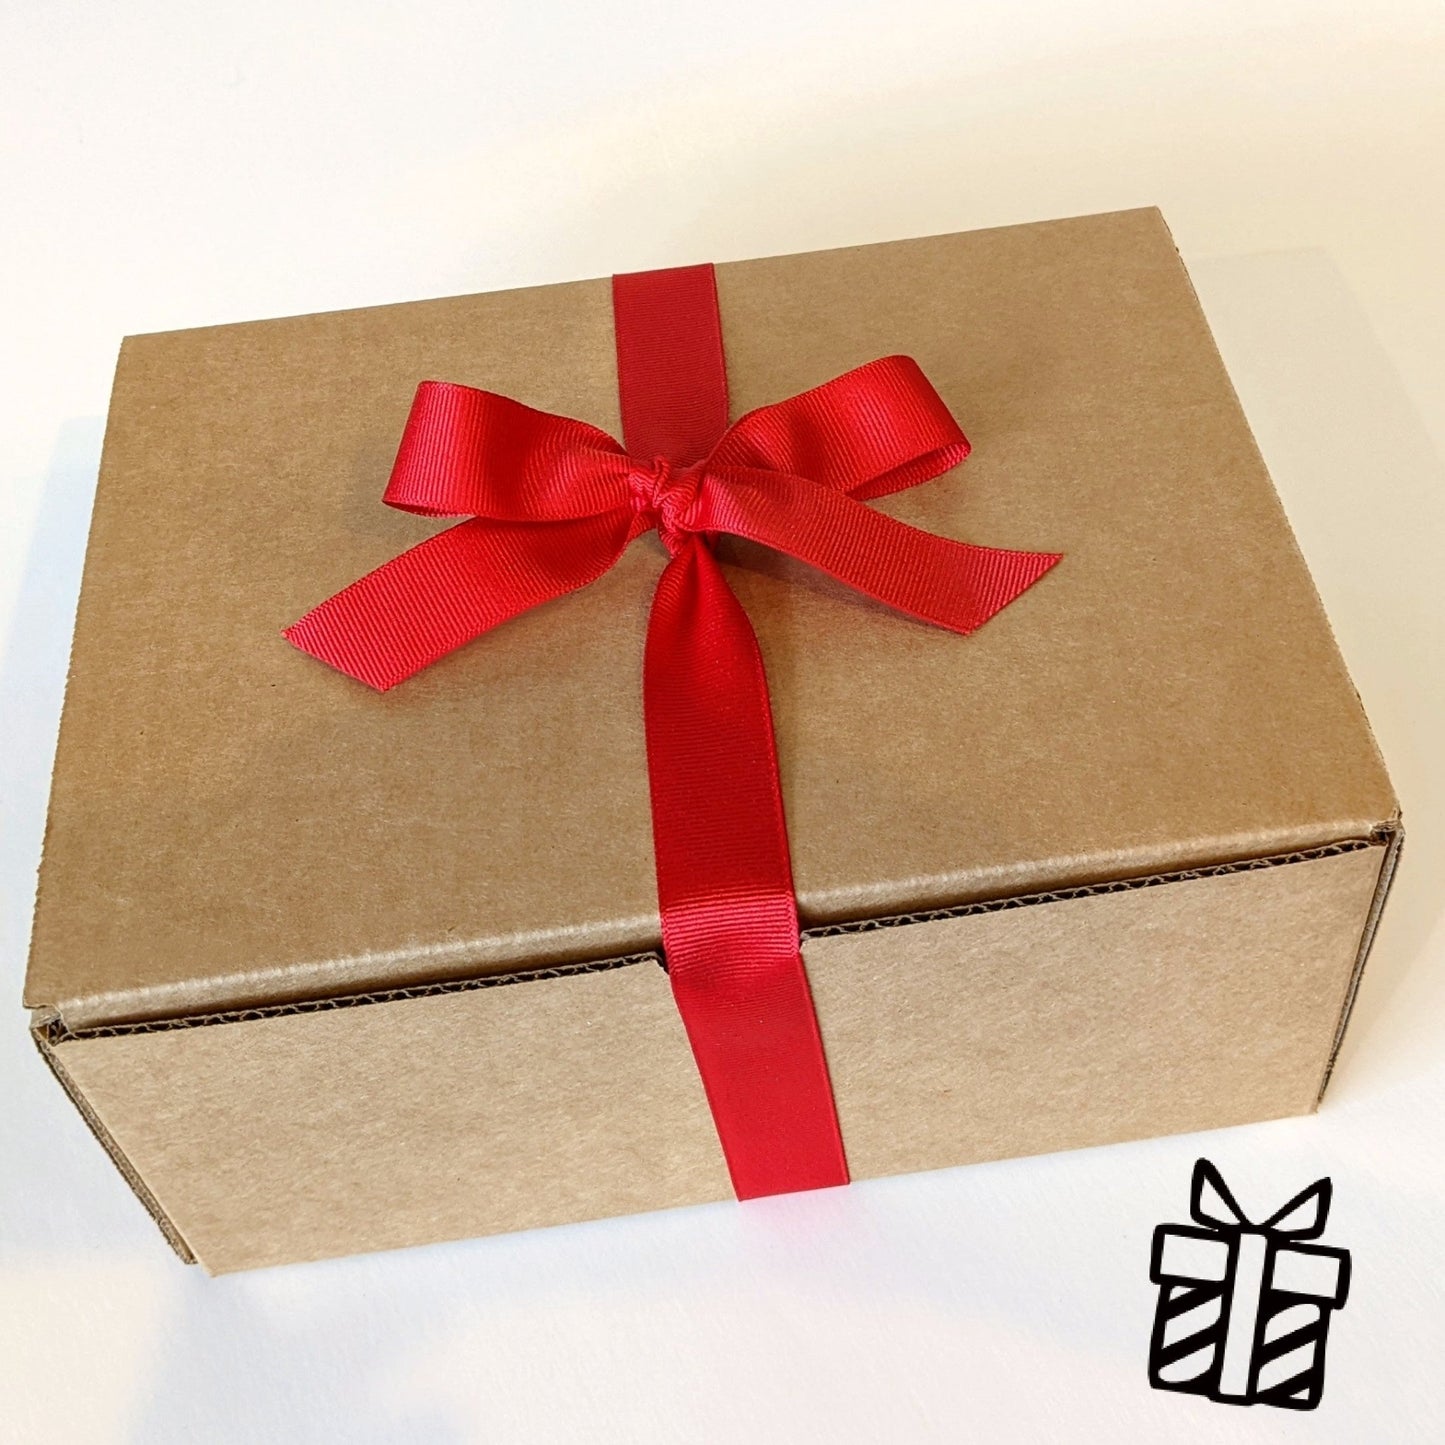 Gift box - Canard et cie